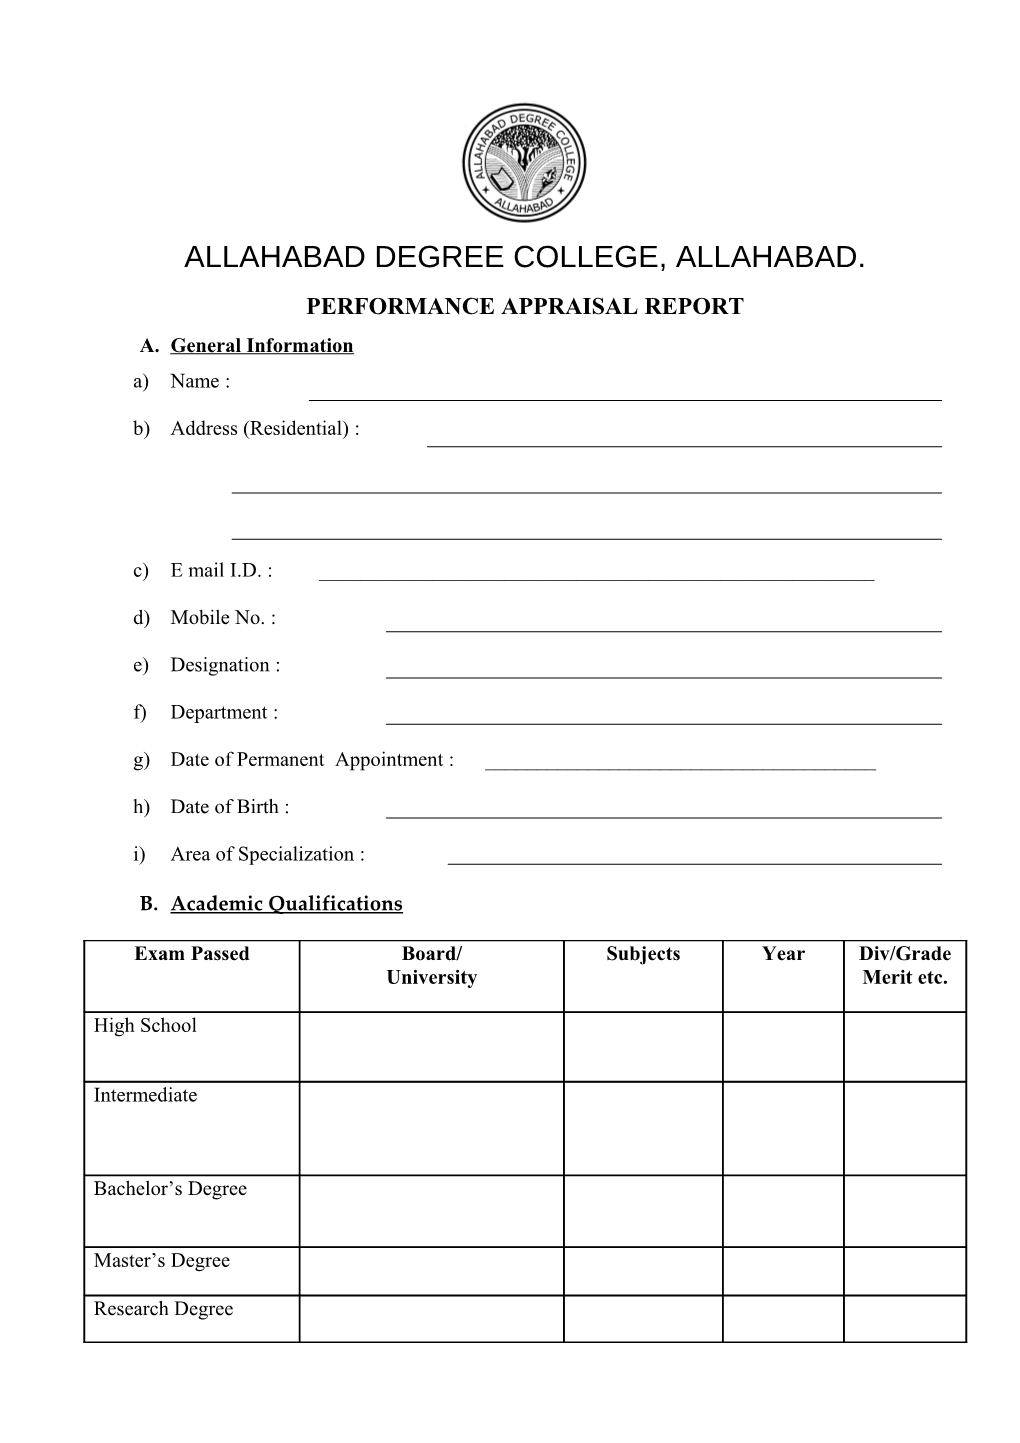 Allahabad Degree College, Allahabad